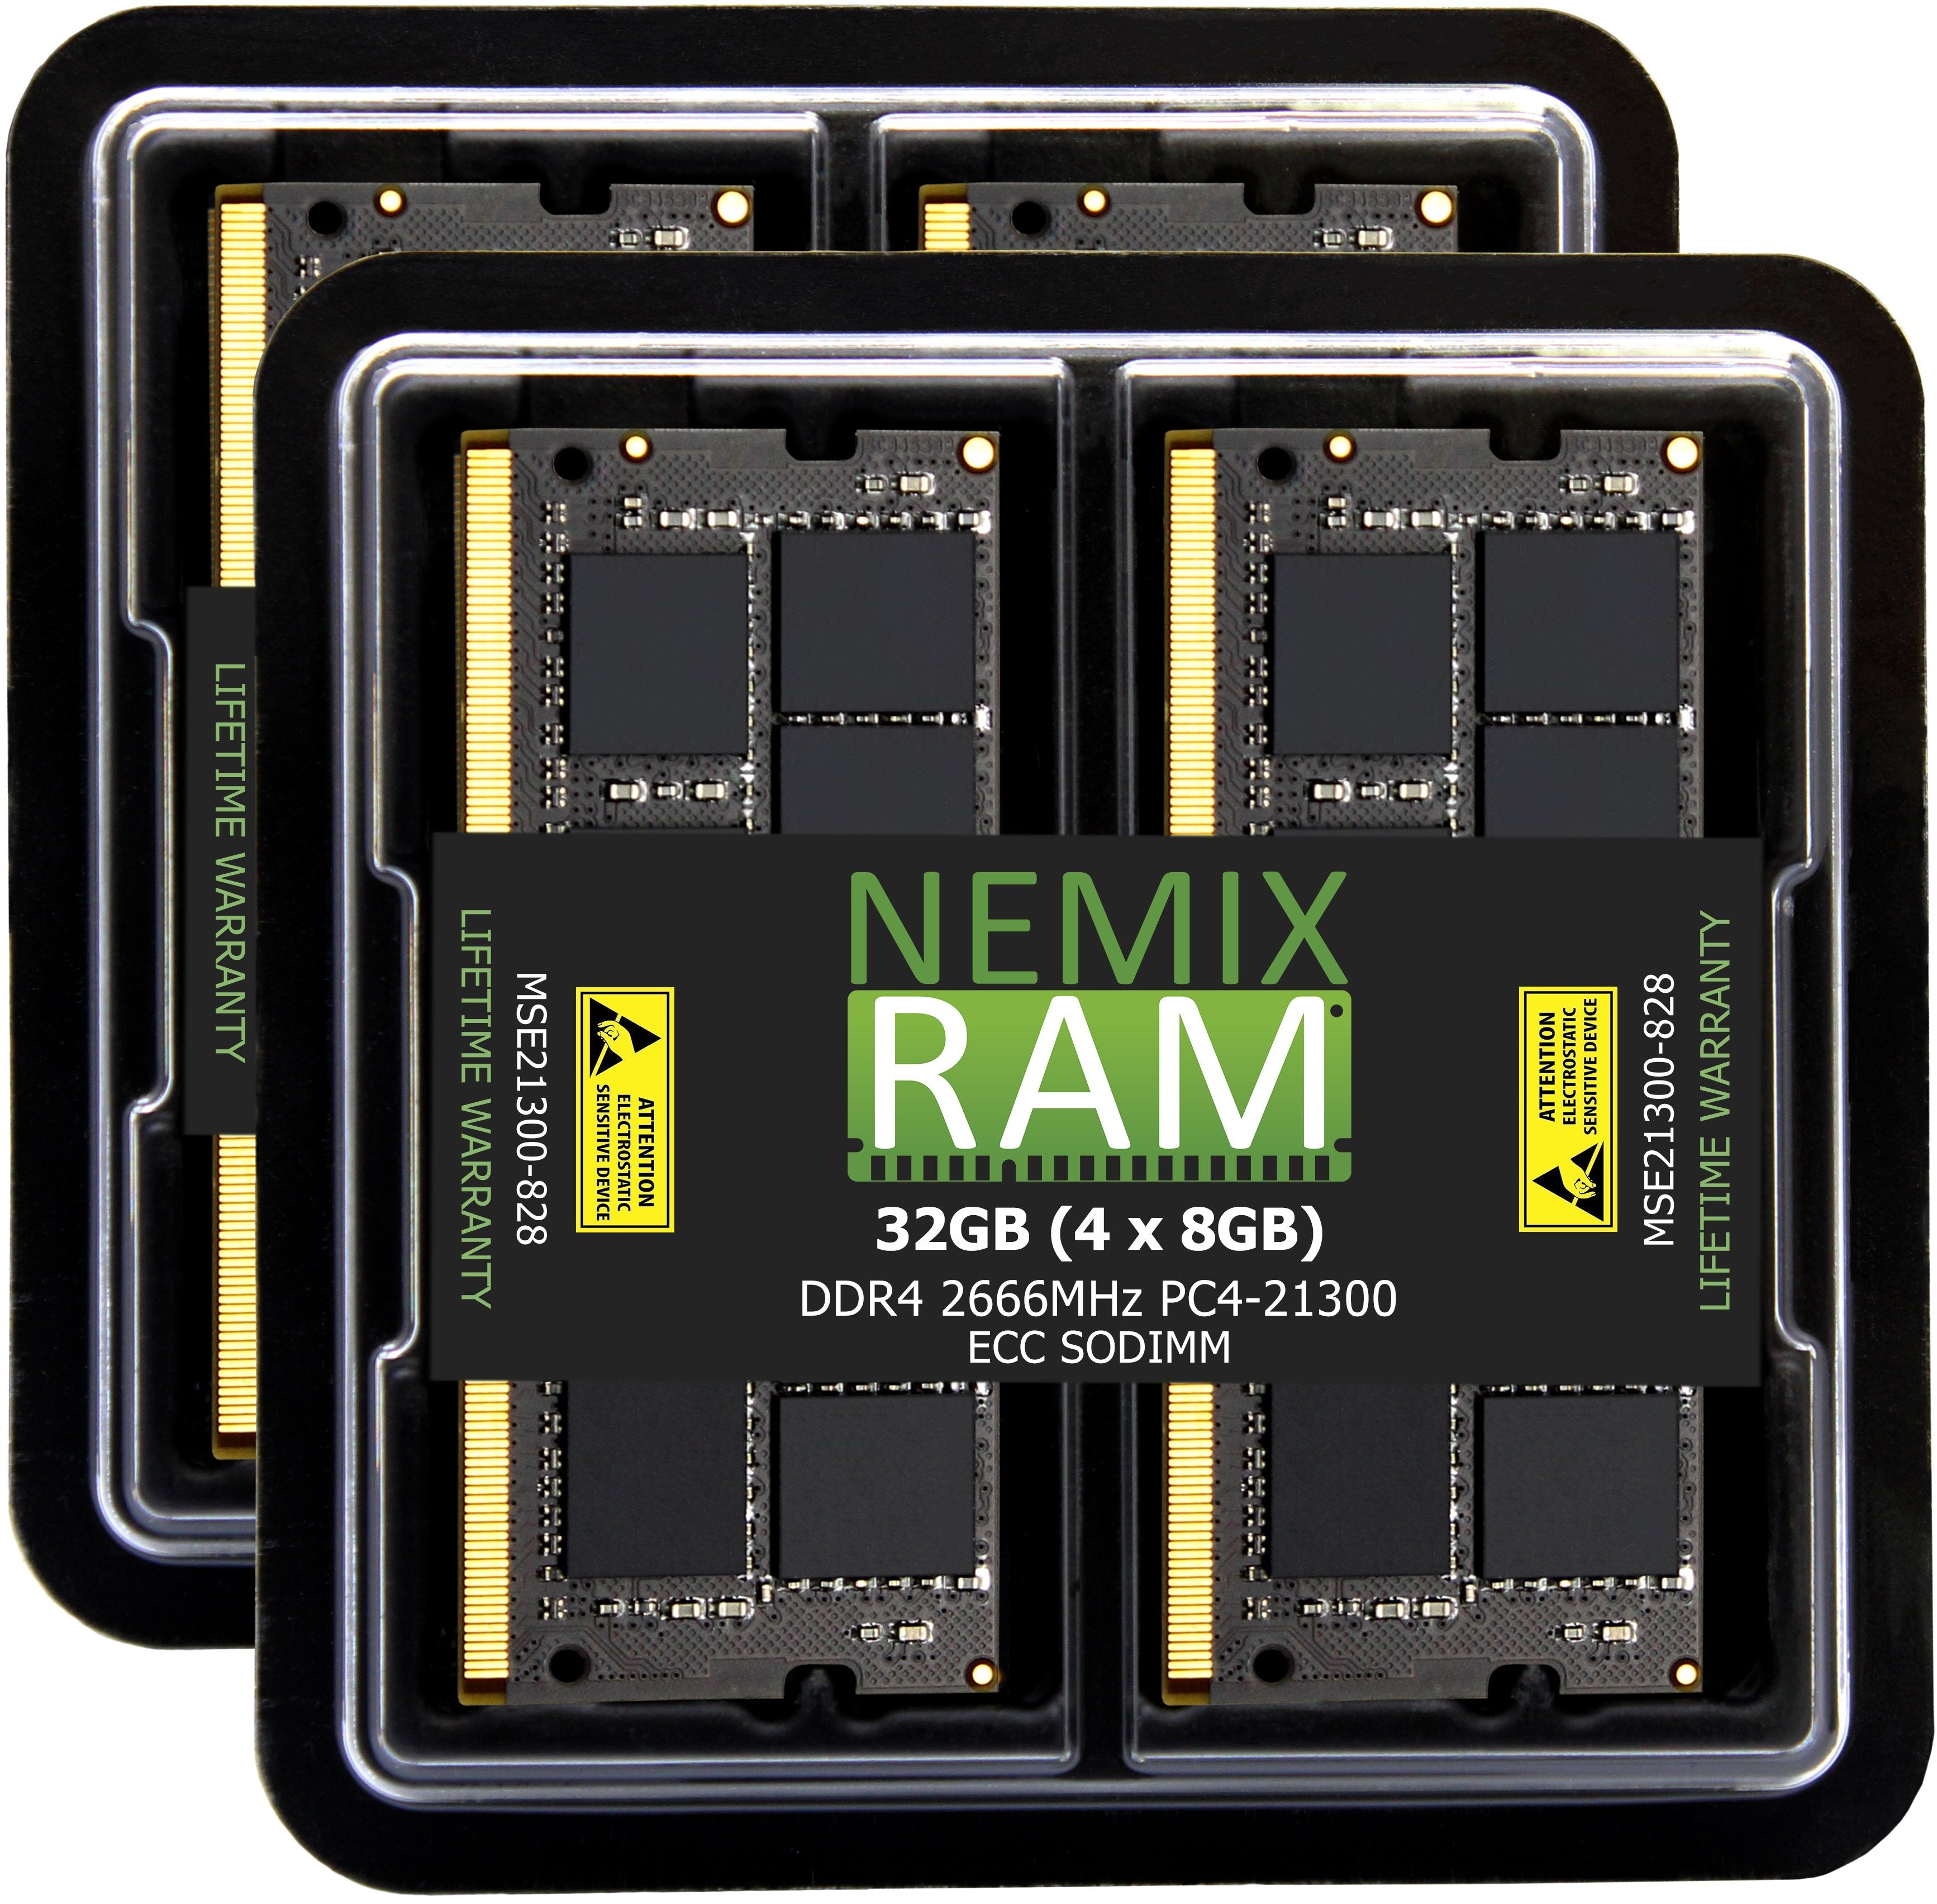 DDR4 2666MHZ PC4-21300 ECC SODIMM 2RX8